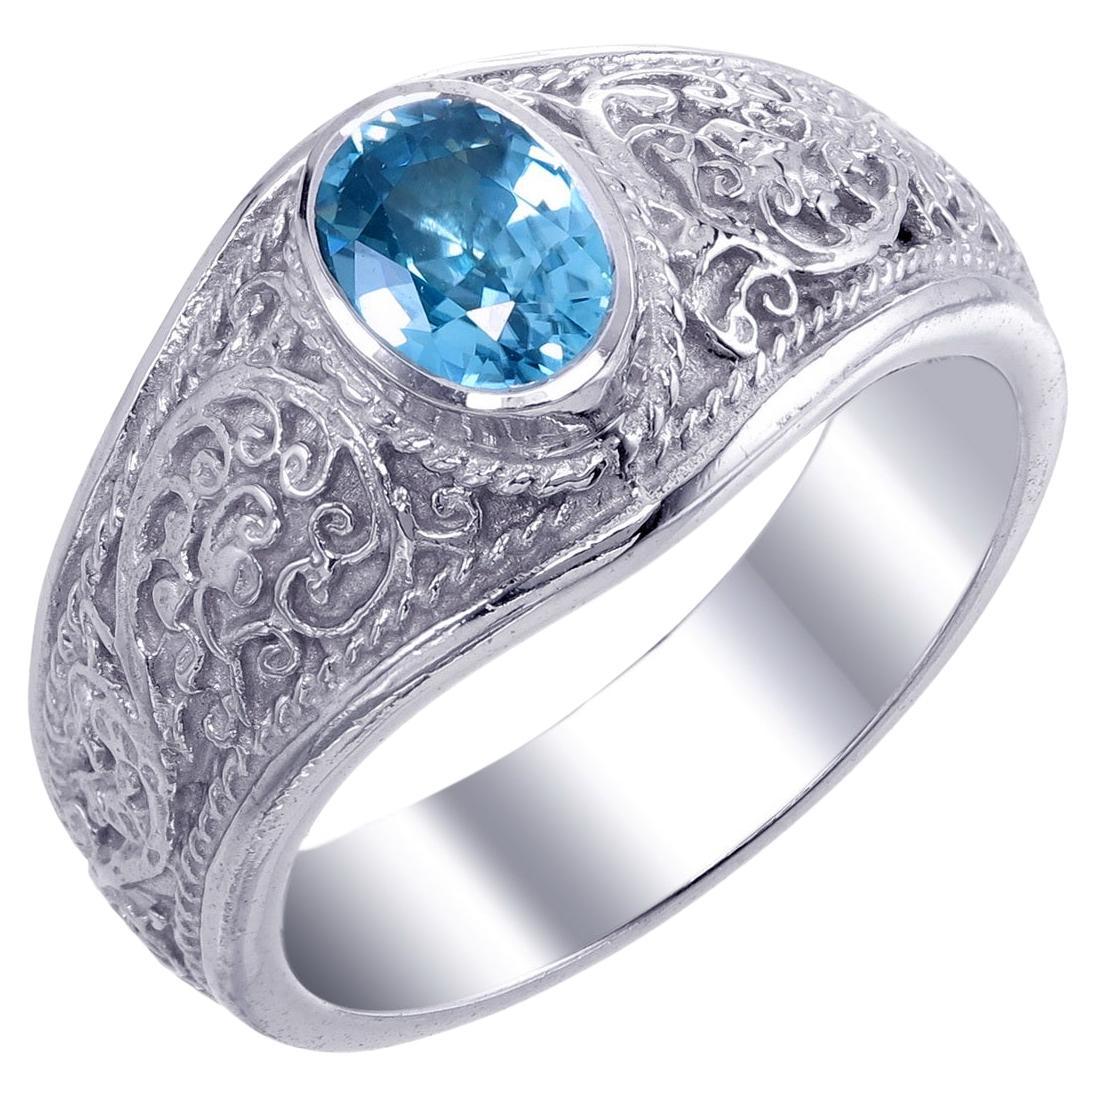 Orloff of Denmark, 1.35 ct Sky Blue Zircon Ring in 925 Sterling Silver For Sale